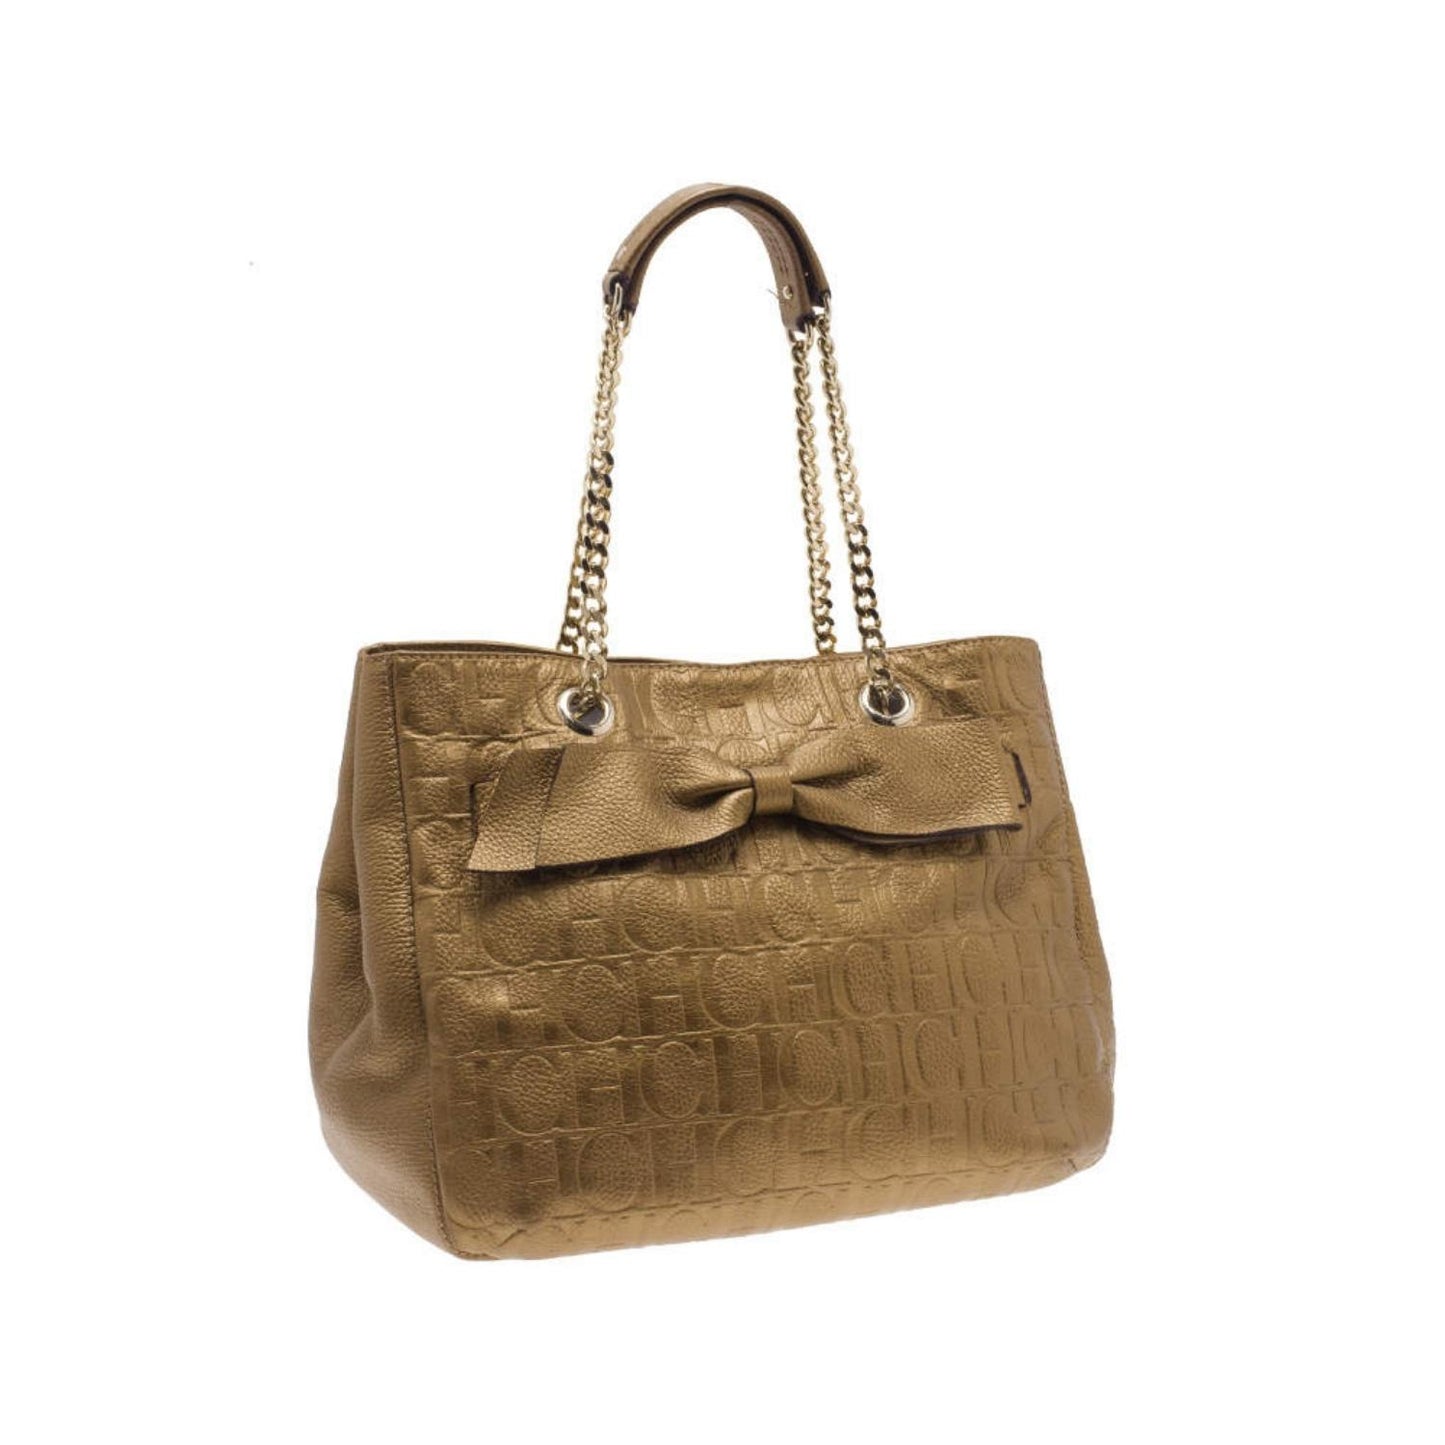 Gold Monogram Leather Audrey Tote Bag